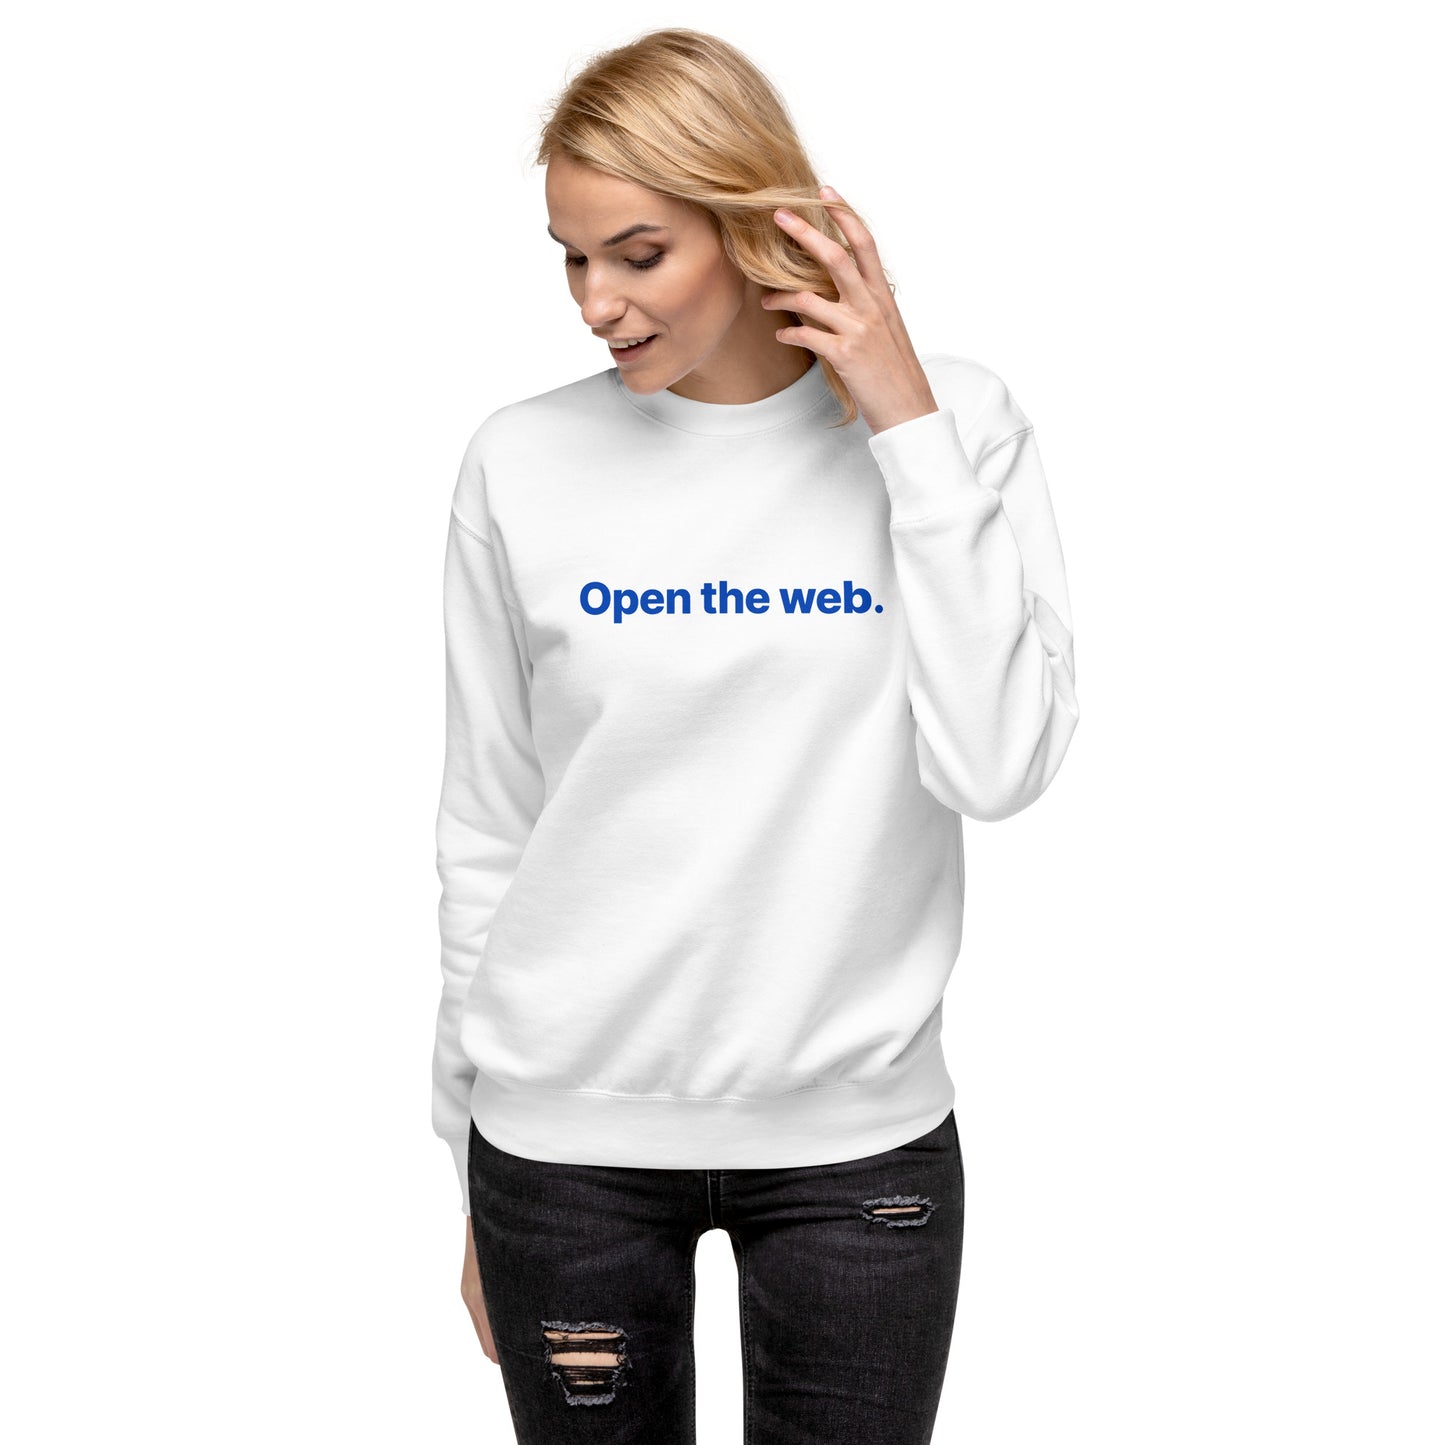 OPEN THE WEB + NEAR BLUE ON WHITE Unisex Premium Sweatshirt